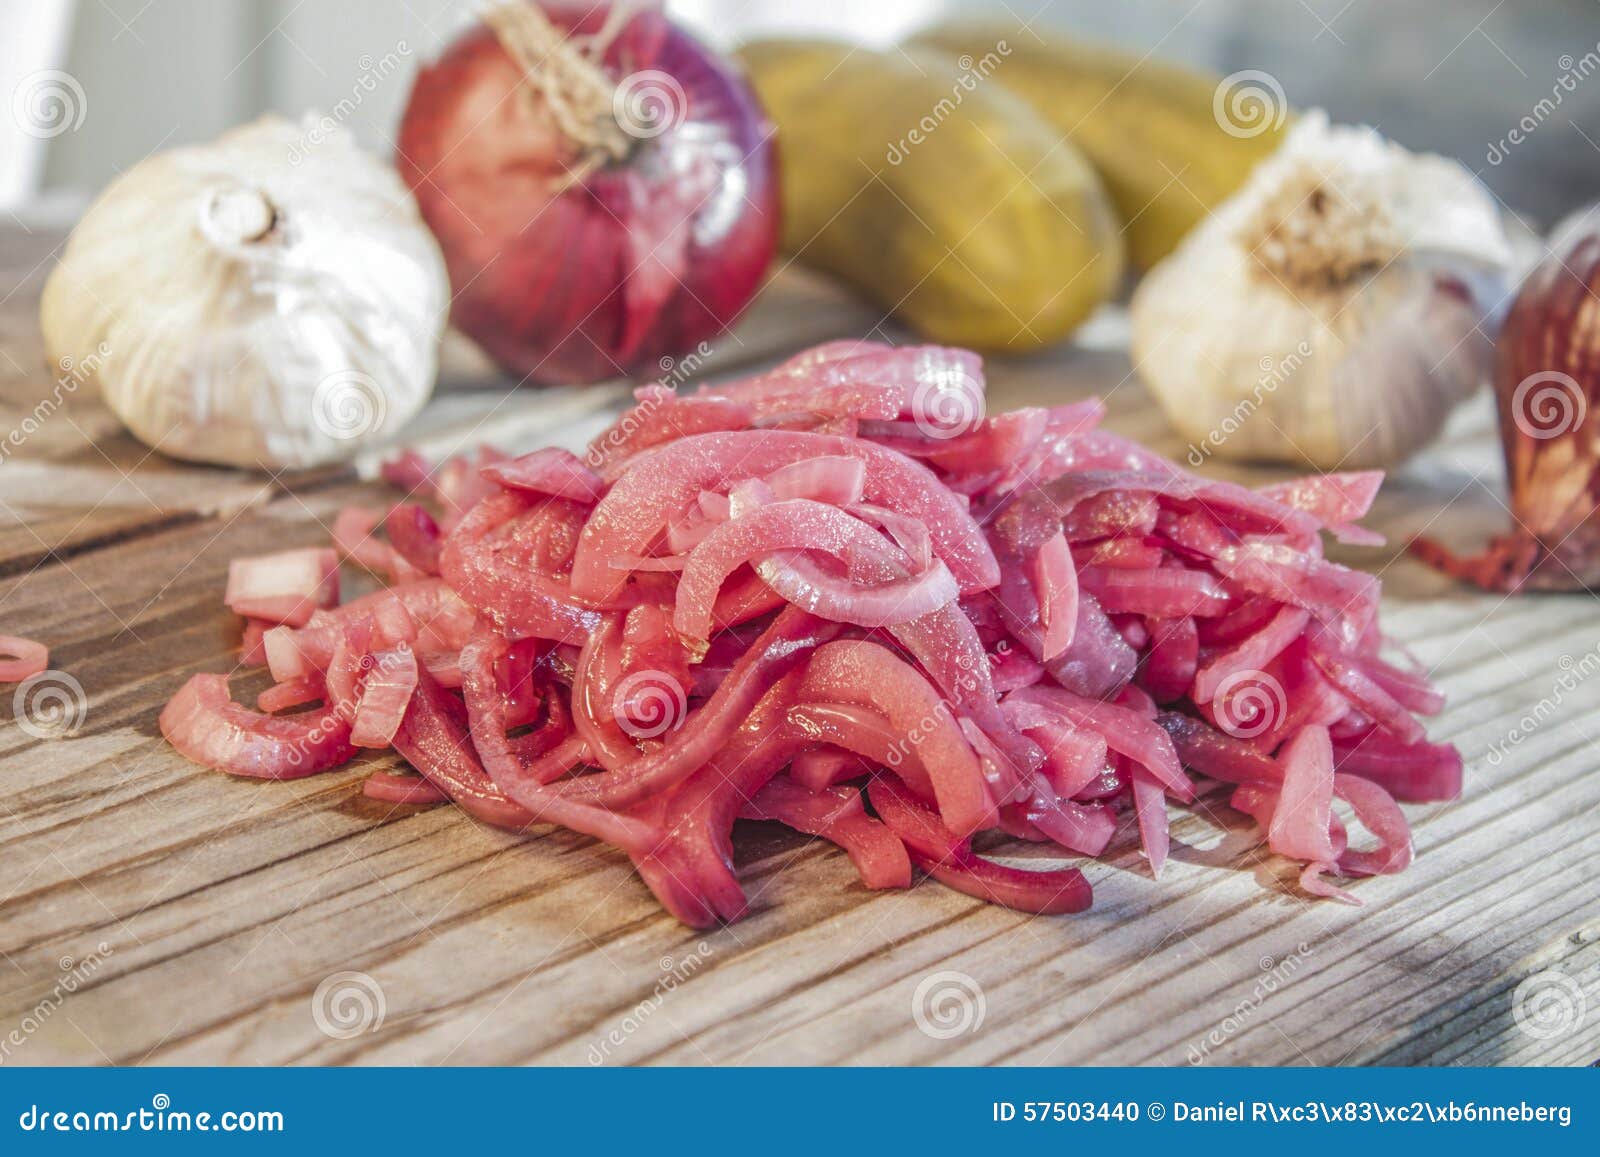 Marinated red onion